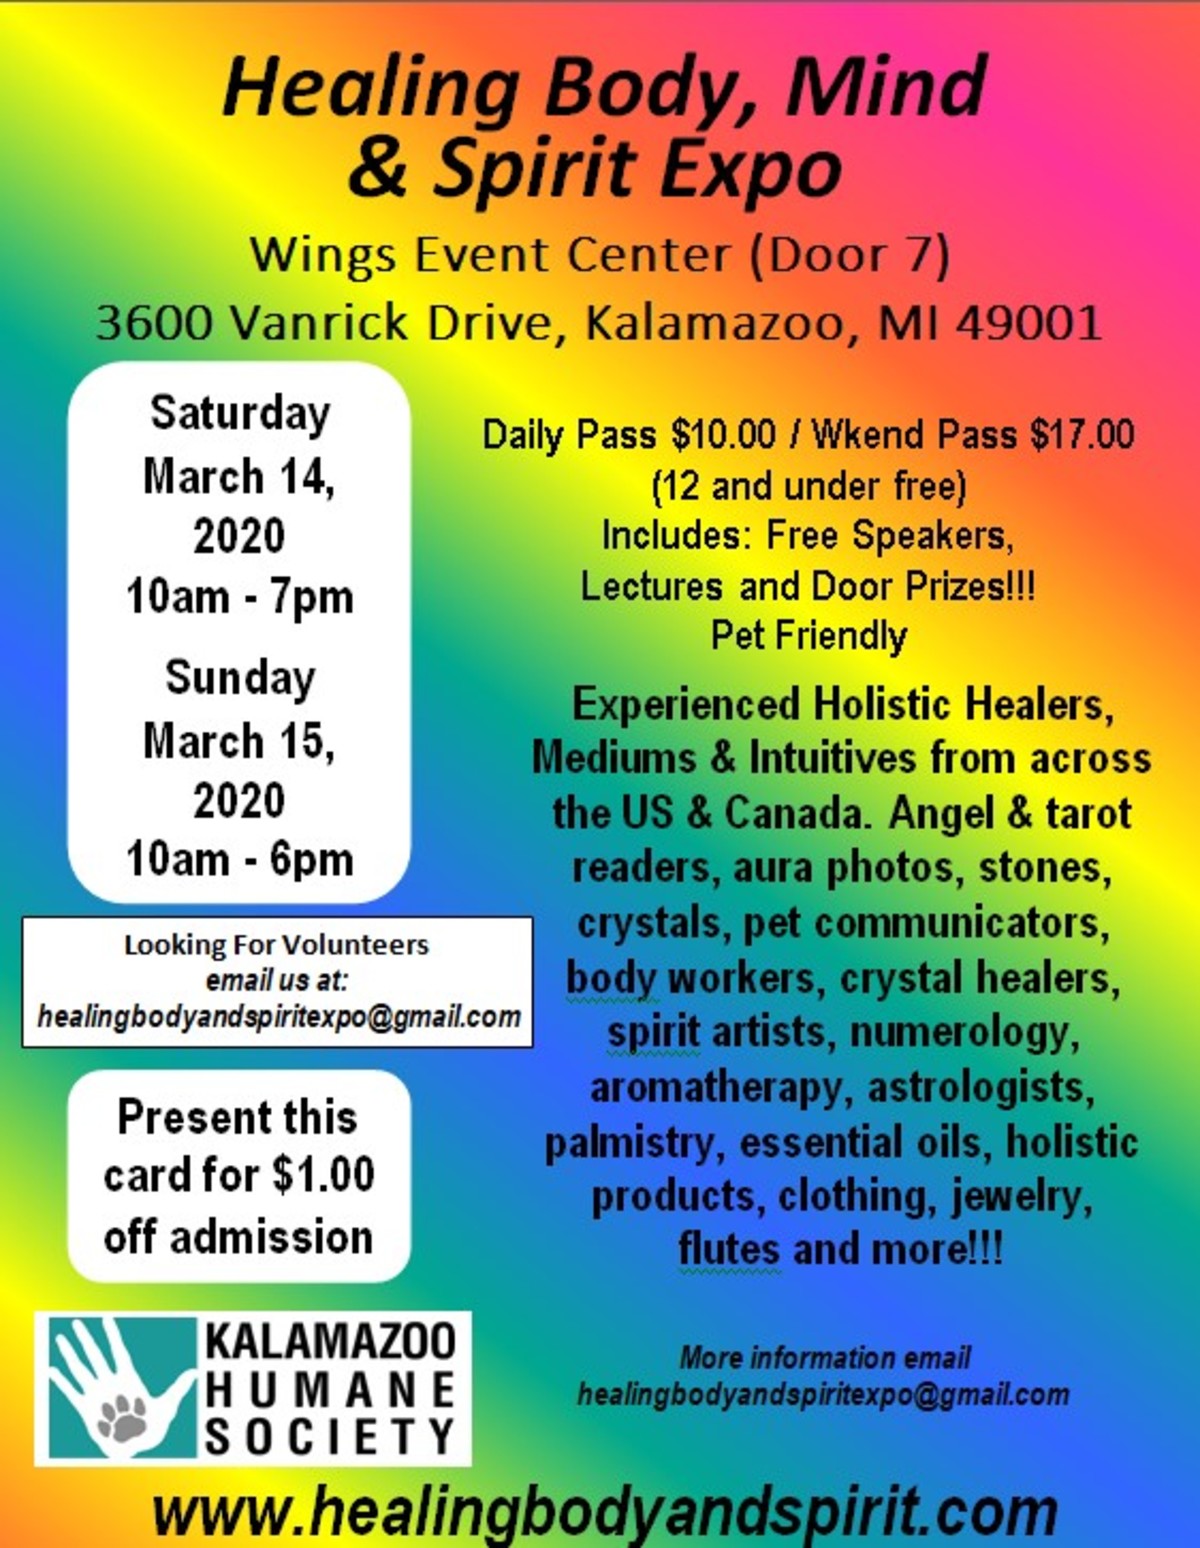 Healing Body and Spirit Expo 2020 in Kalamazoo, MI | Everfest